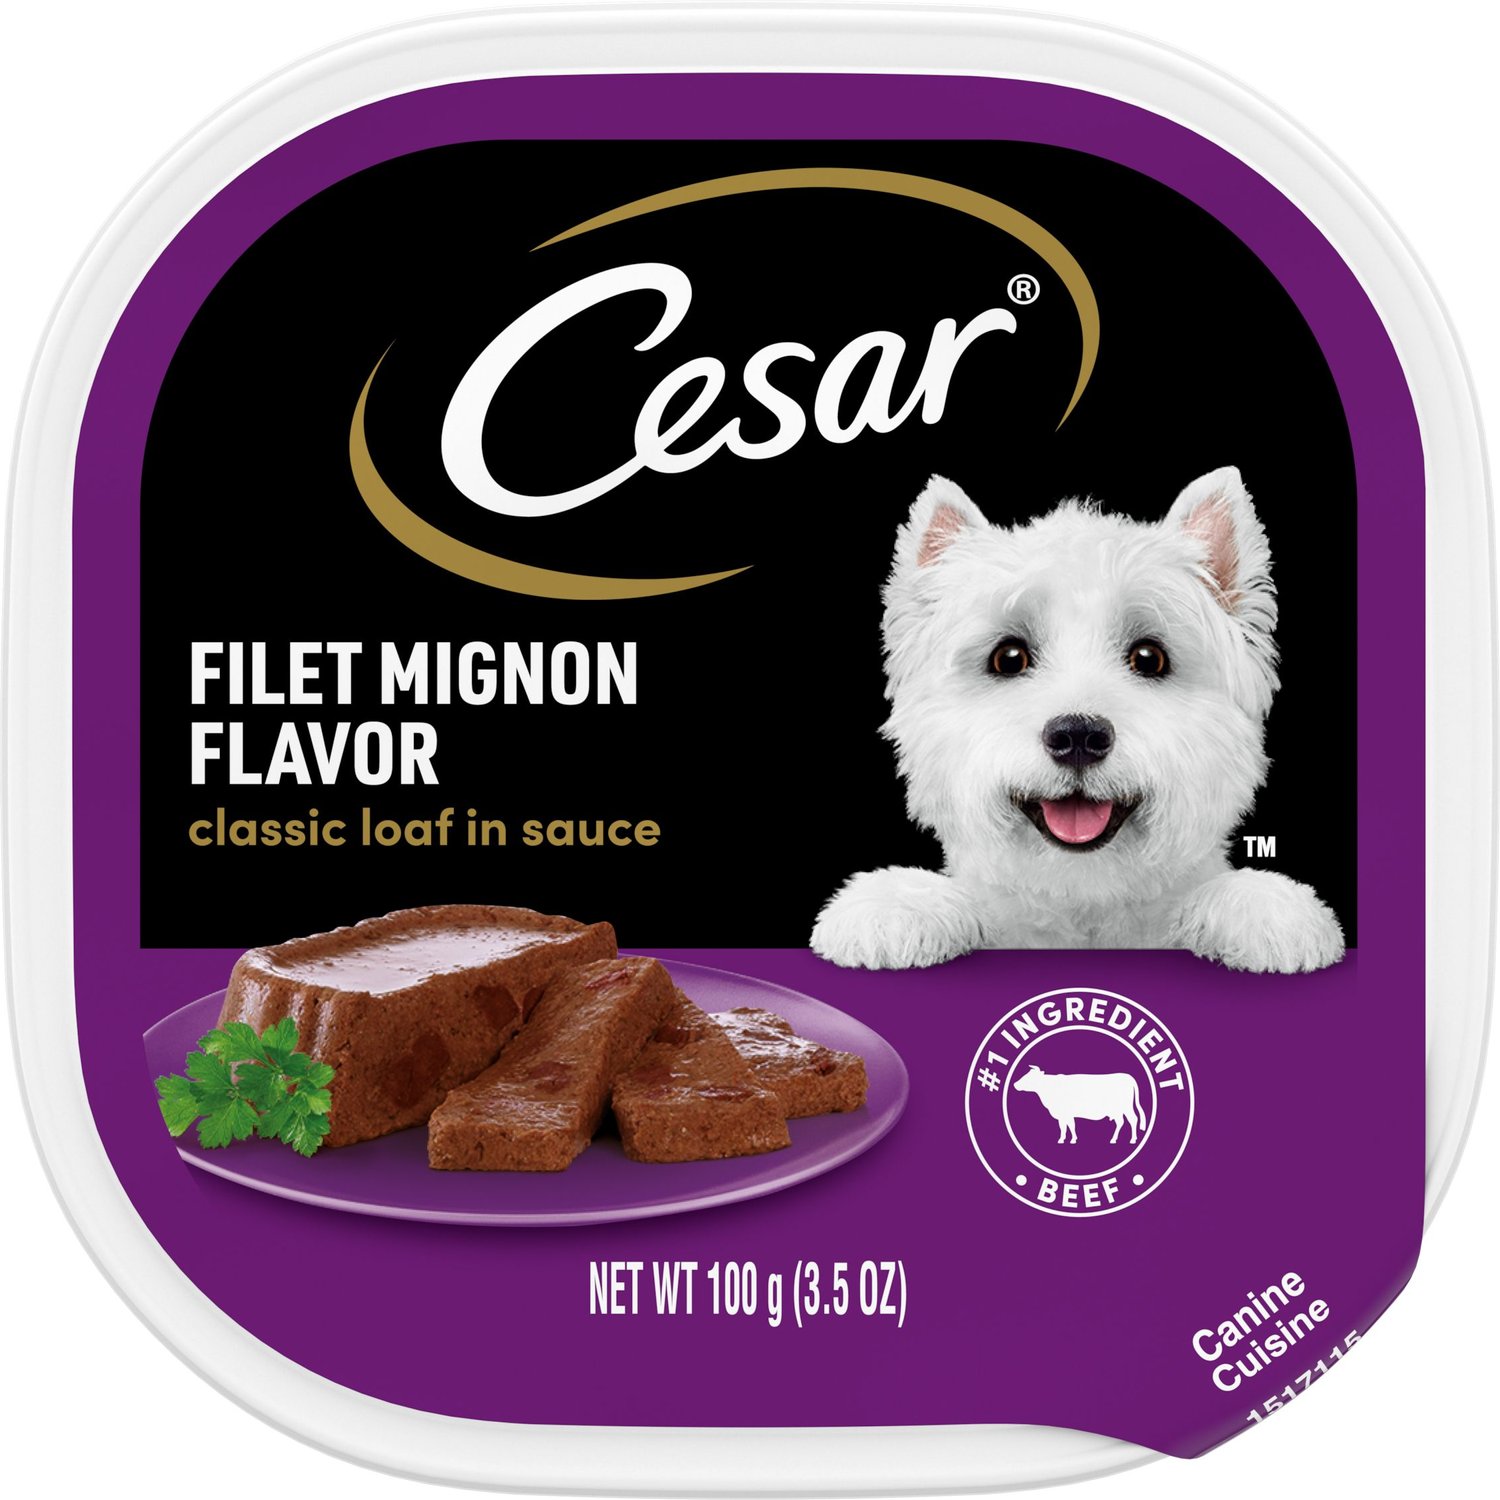 Cesar Dog Food Feeding Chart